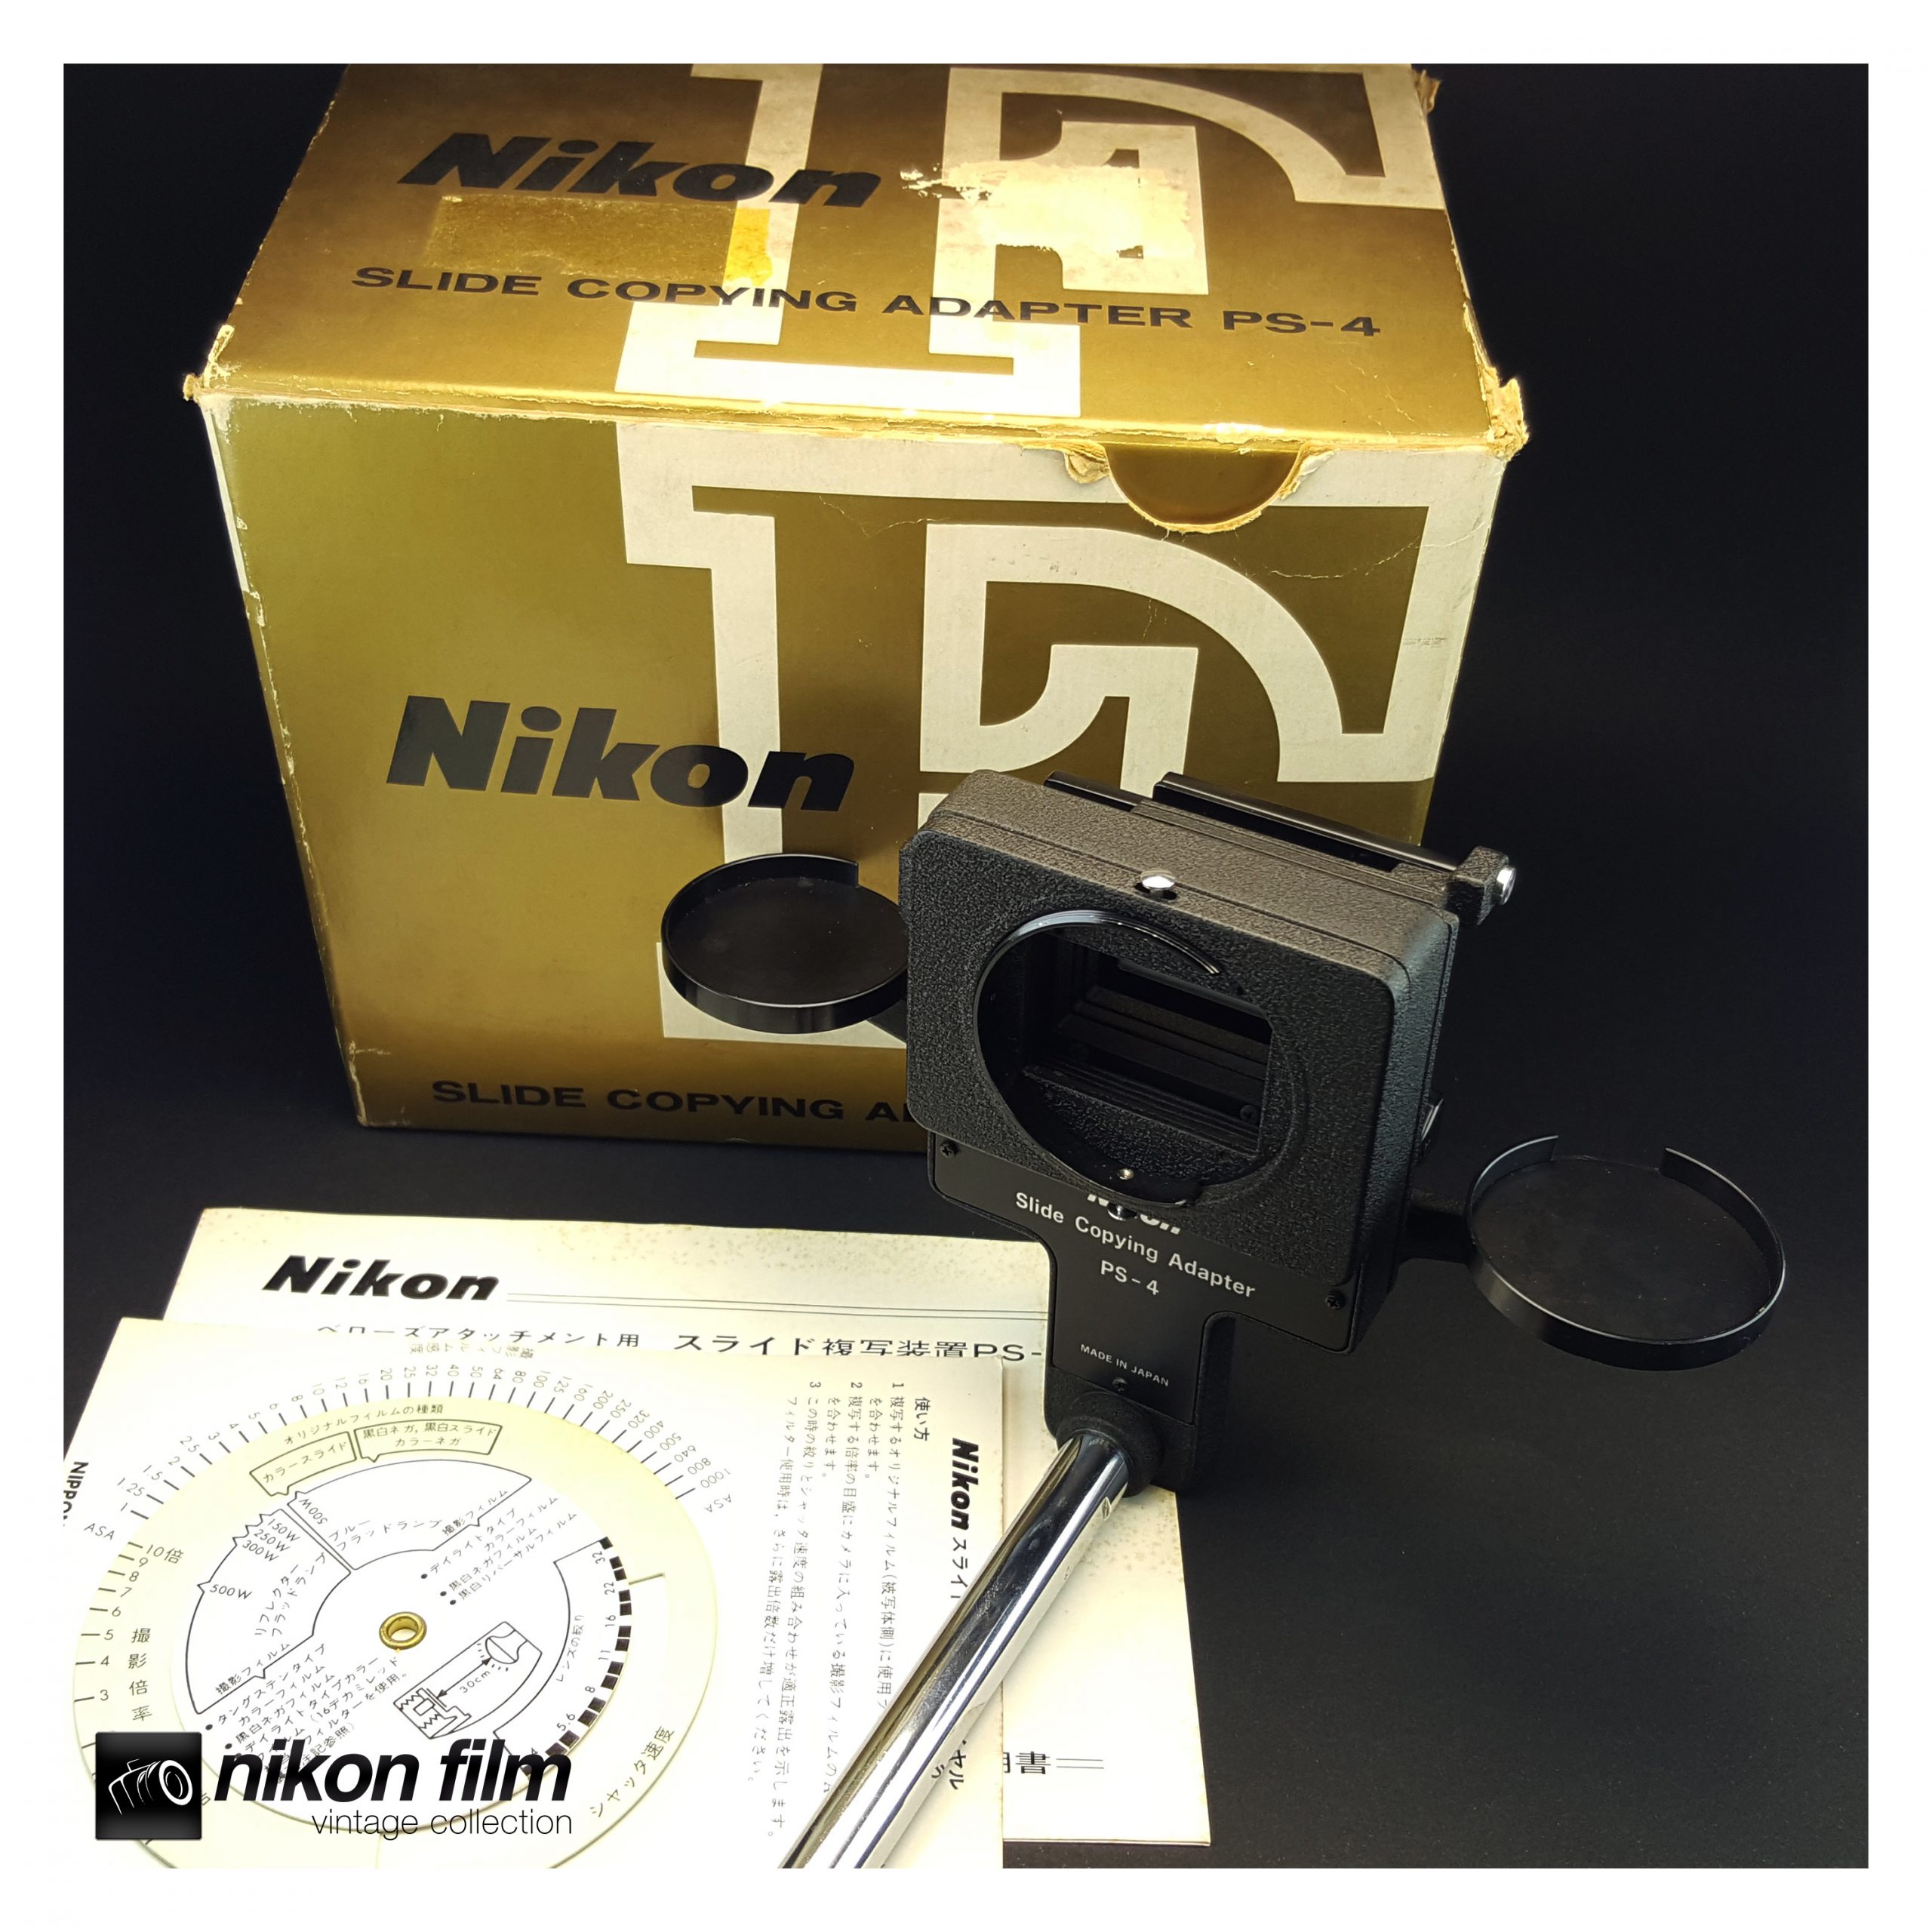 Nikon Slide Copying Adapter PS-4 - Boxed